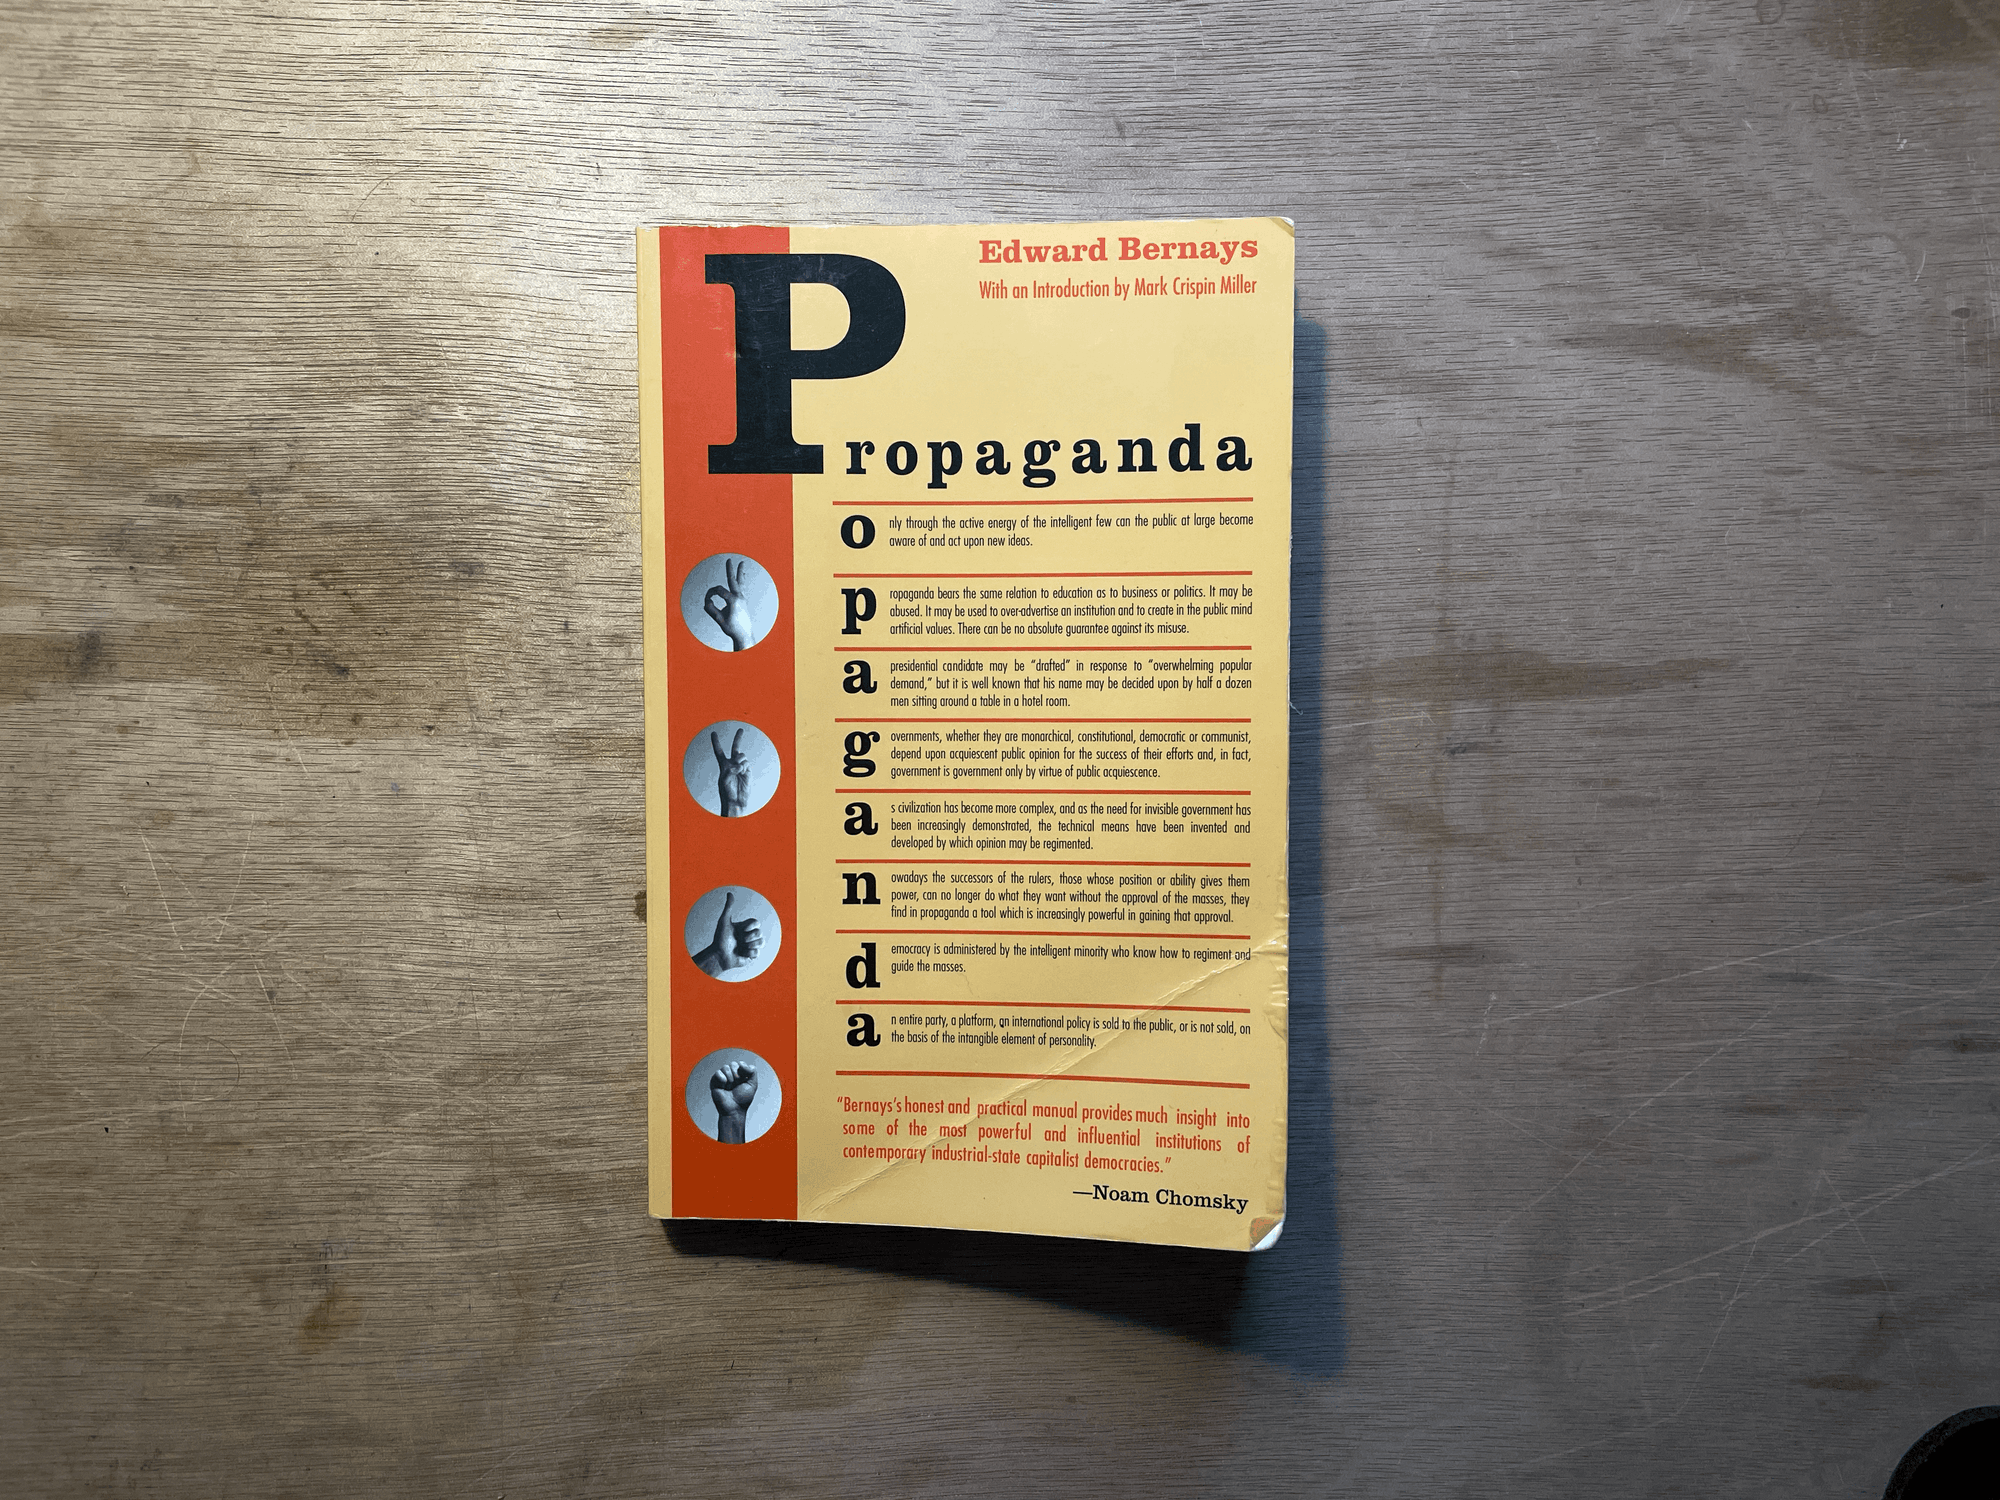 The book that invented the idea of propaganda